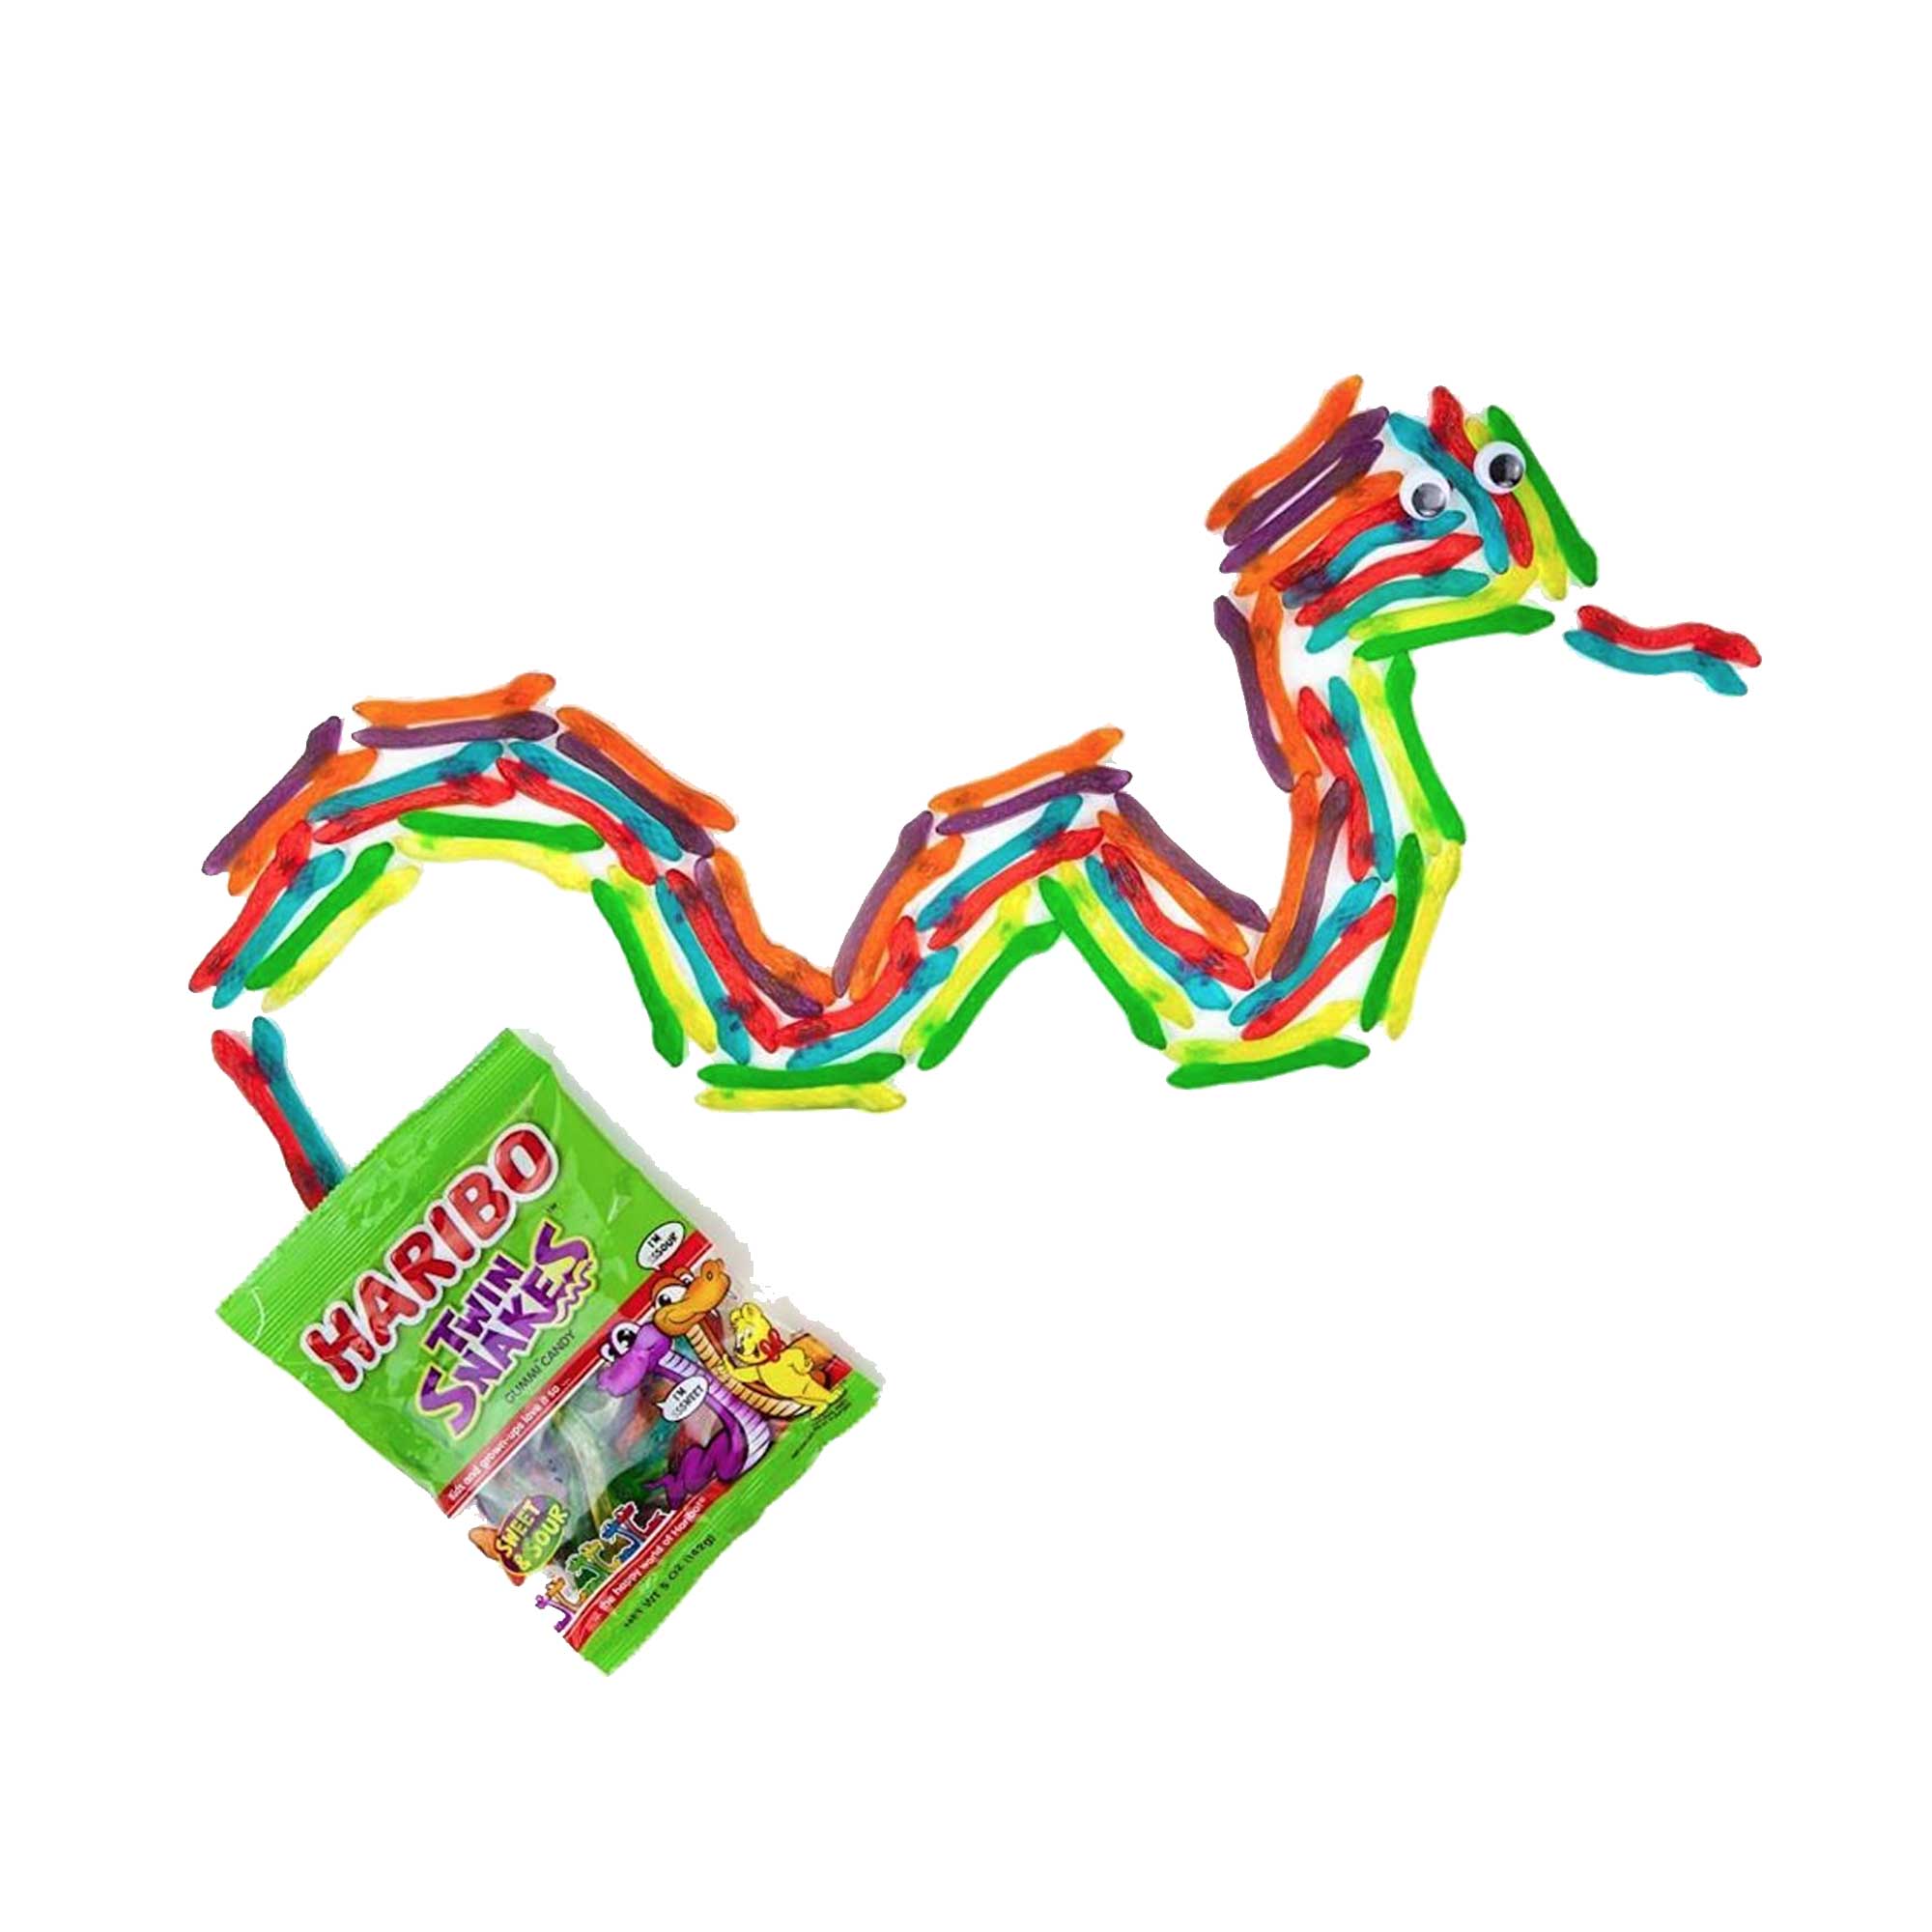 Haribo Kids Kinder Schnuller 150pcs 1200g Tub -Gummi Candy- Sweets from  Germany | eBay